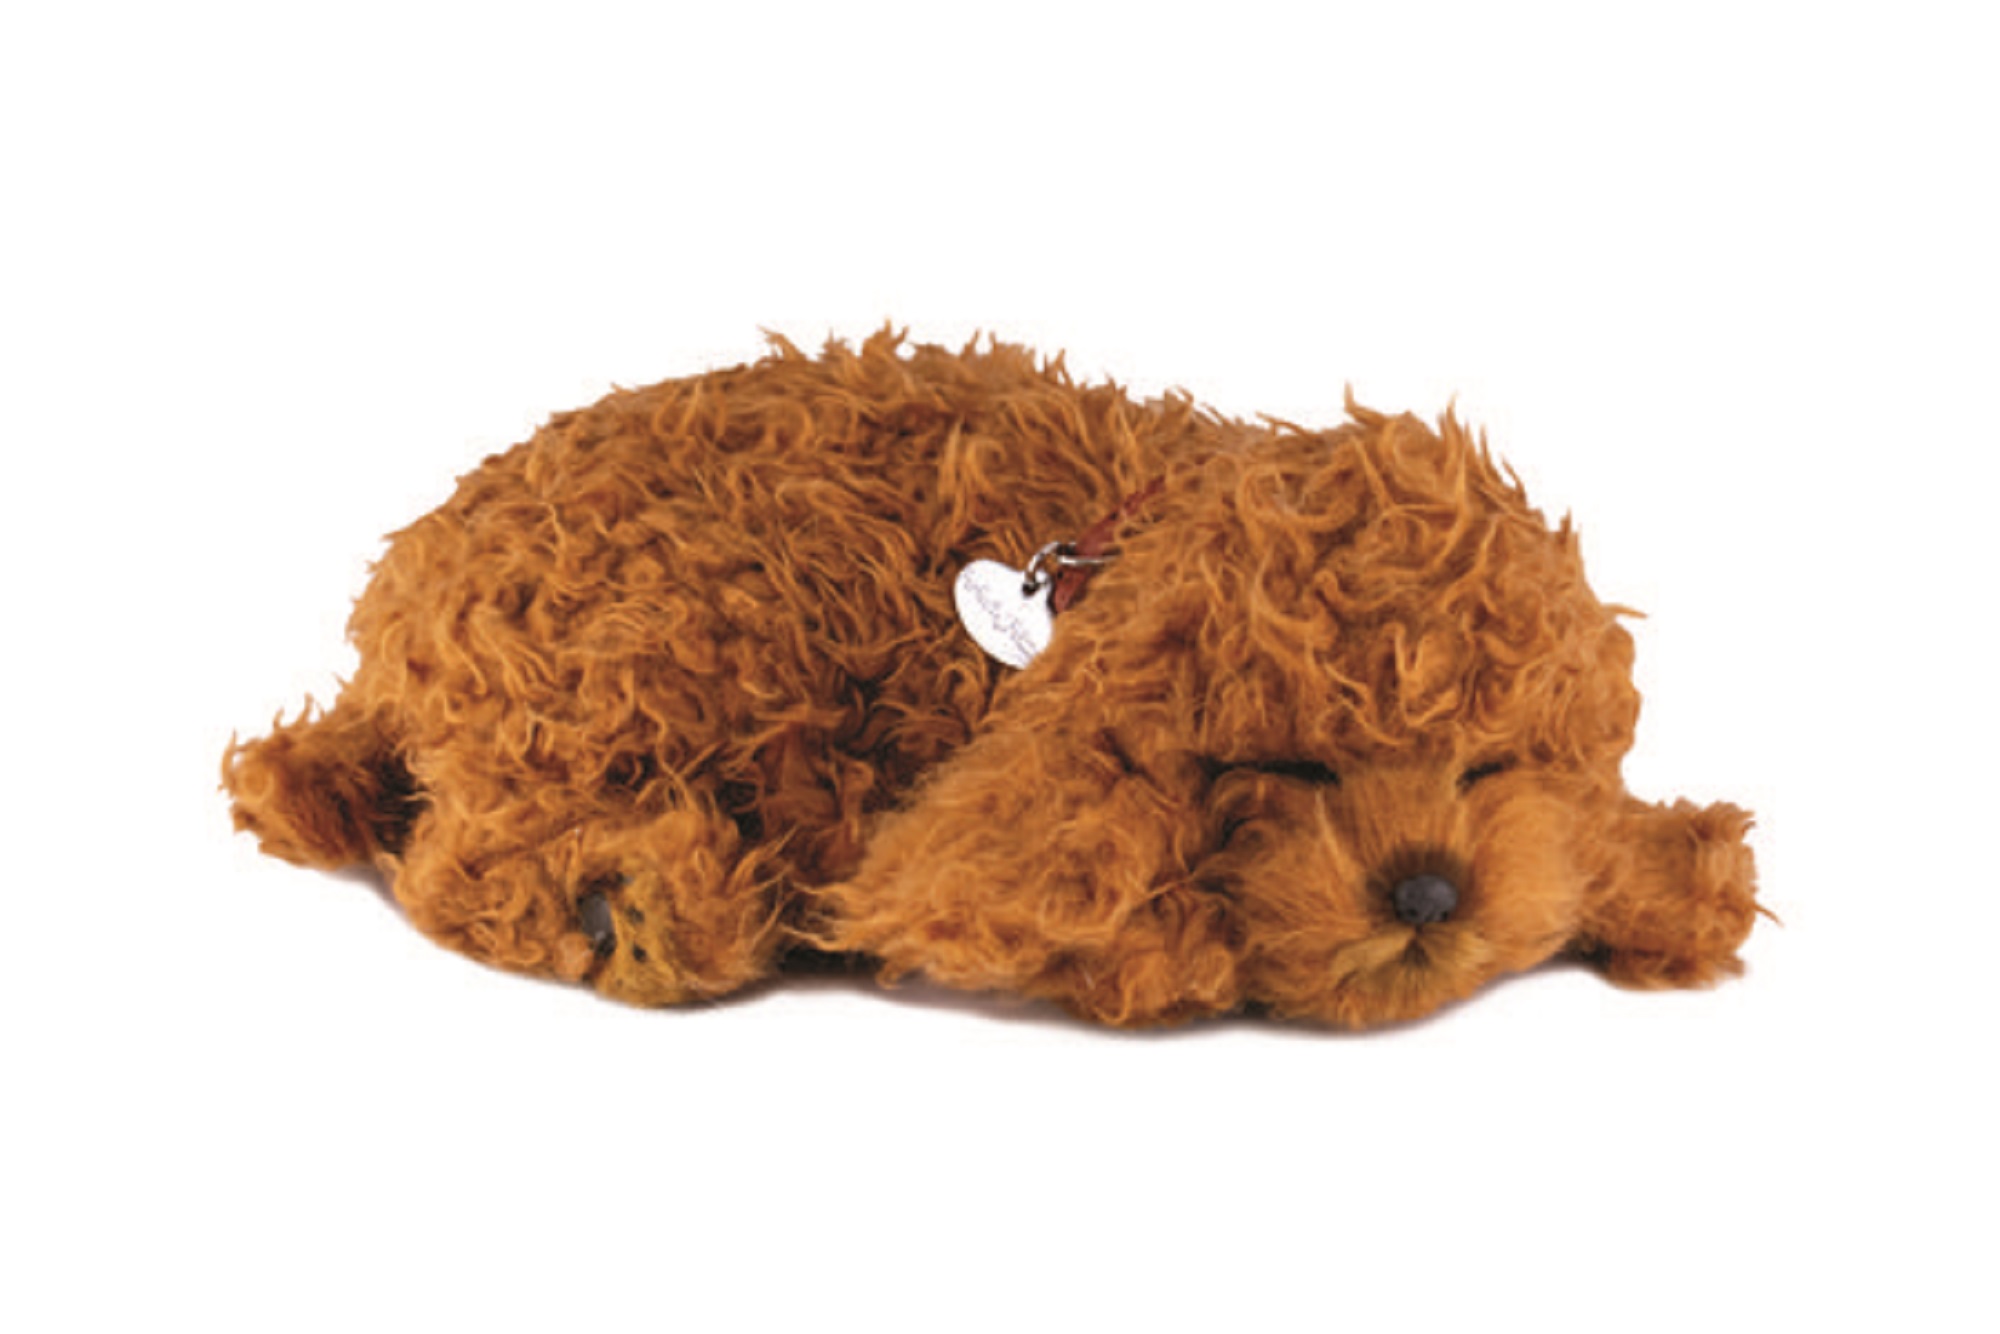 Border Collie Breathing Pet Plush Toy